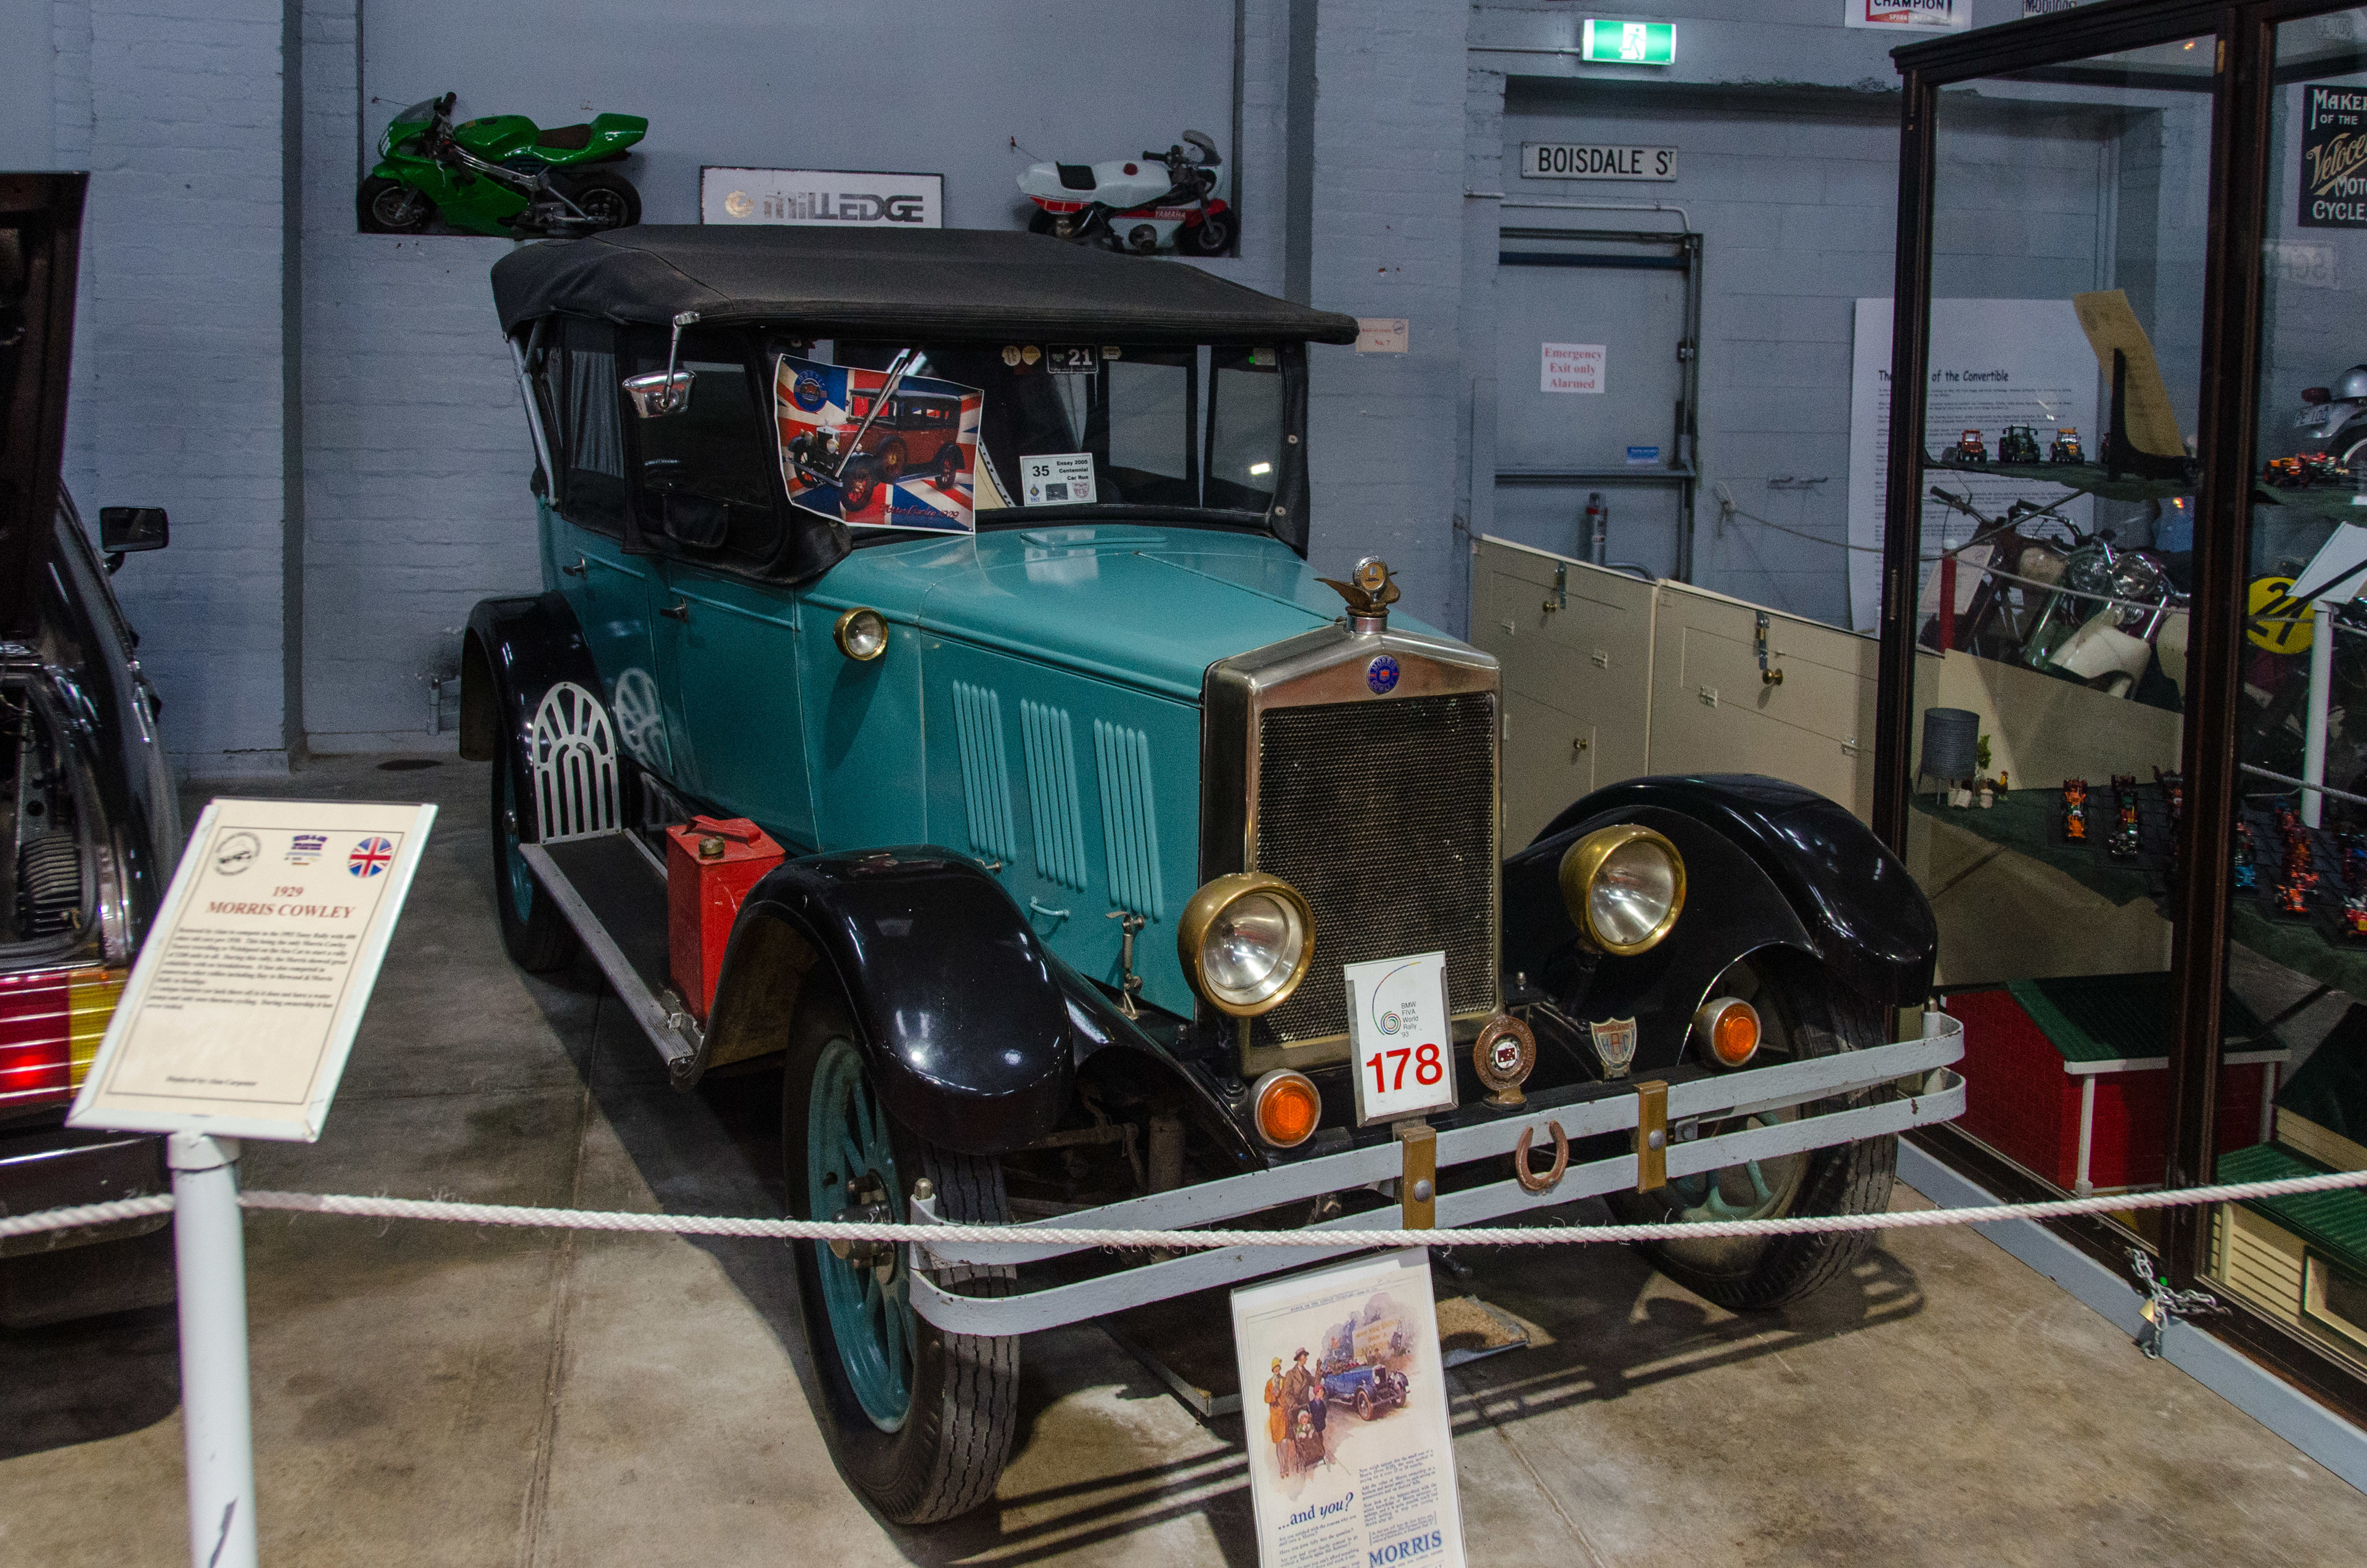 Gippsland Vehicle Collection Maffra Victoria Australia 